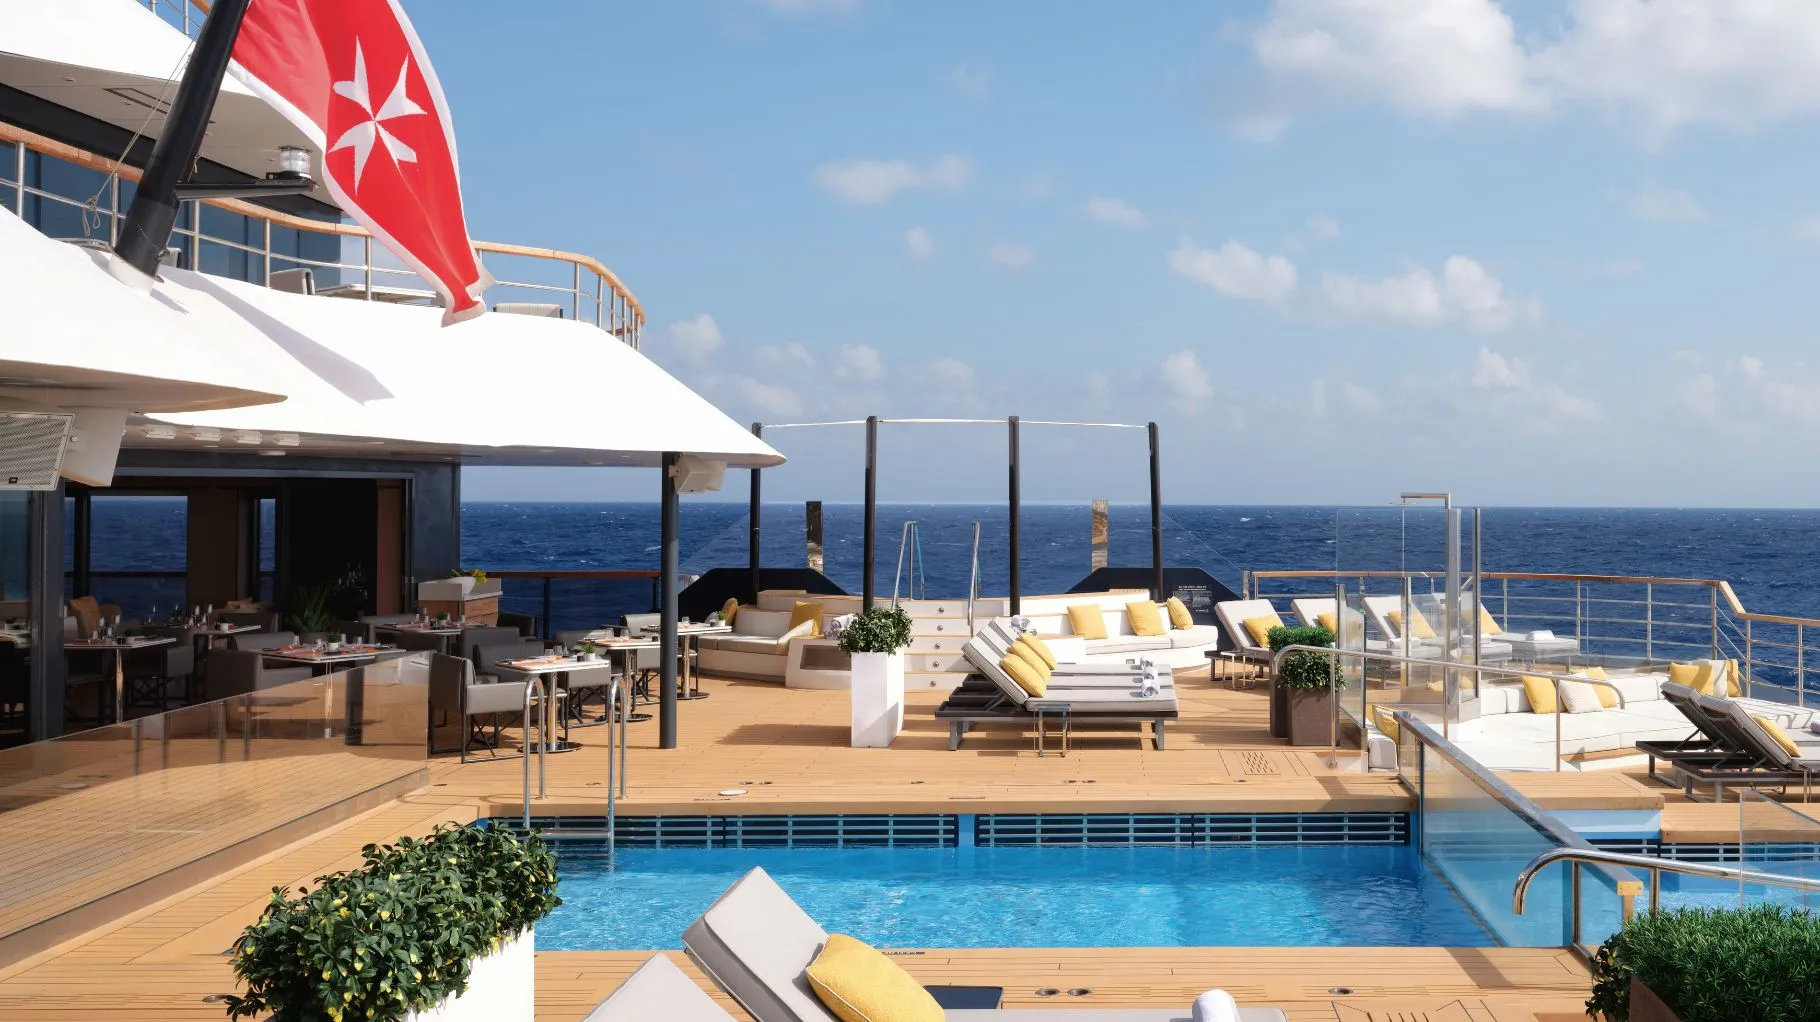 A journey on the Ritz-Carlton Yacht - Cruise Passenger